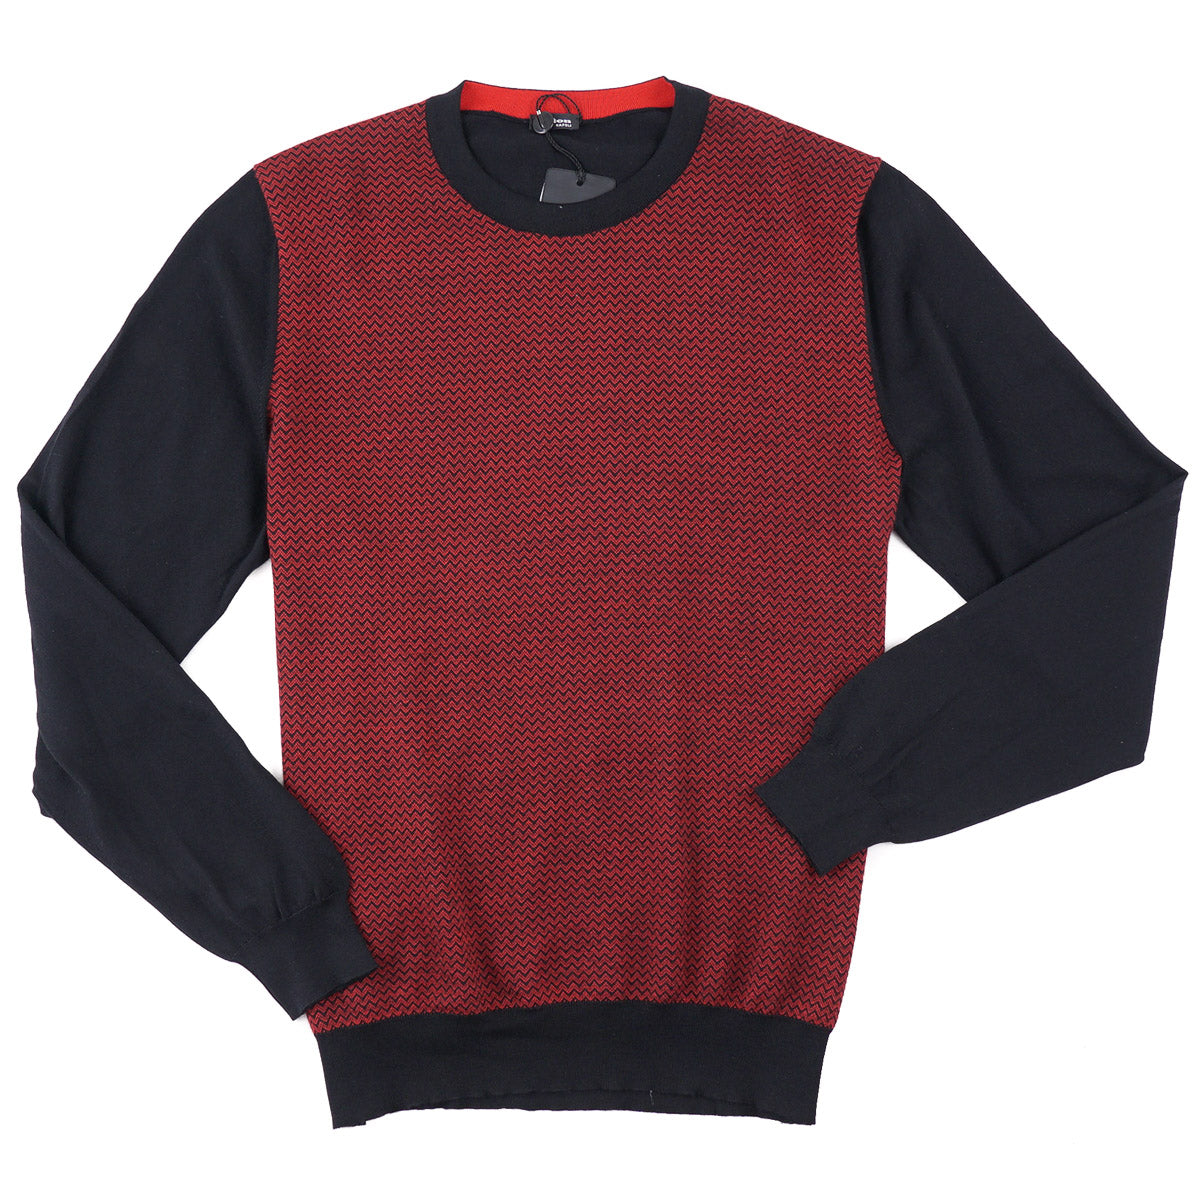 Kiton Superfine Cashmere-Silk Sweater - Top Shelf Apparel